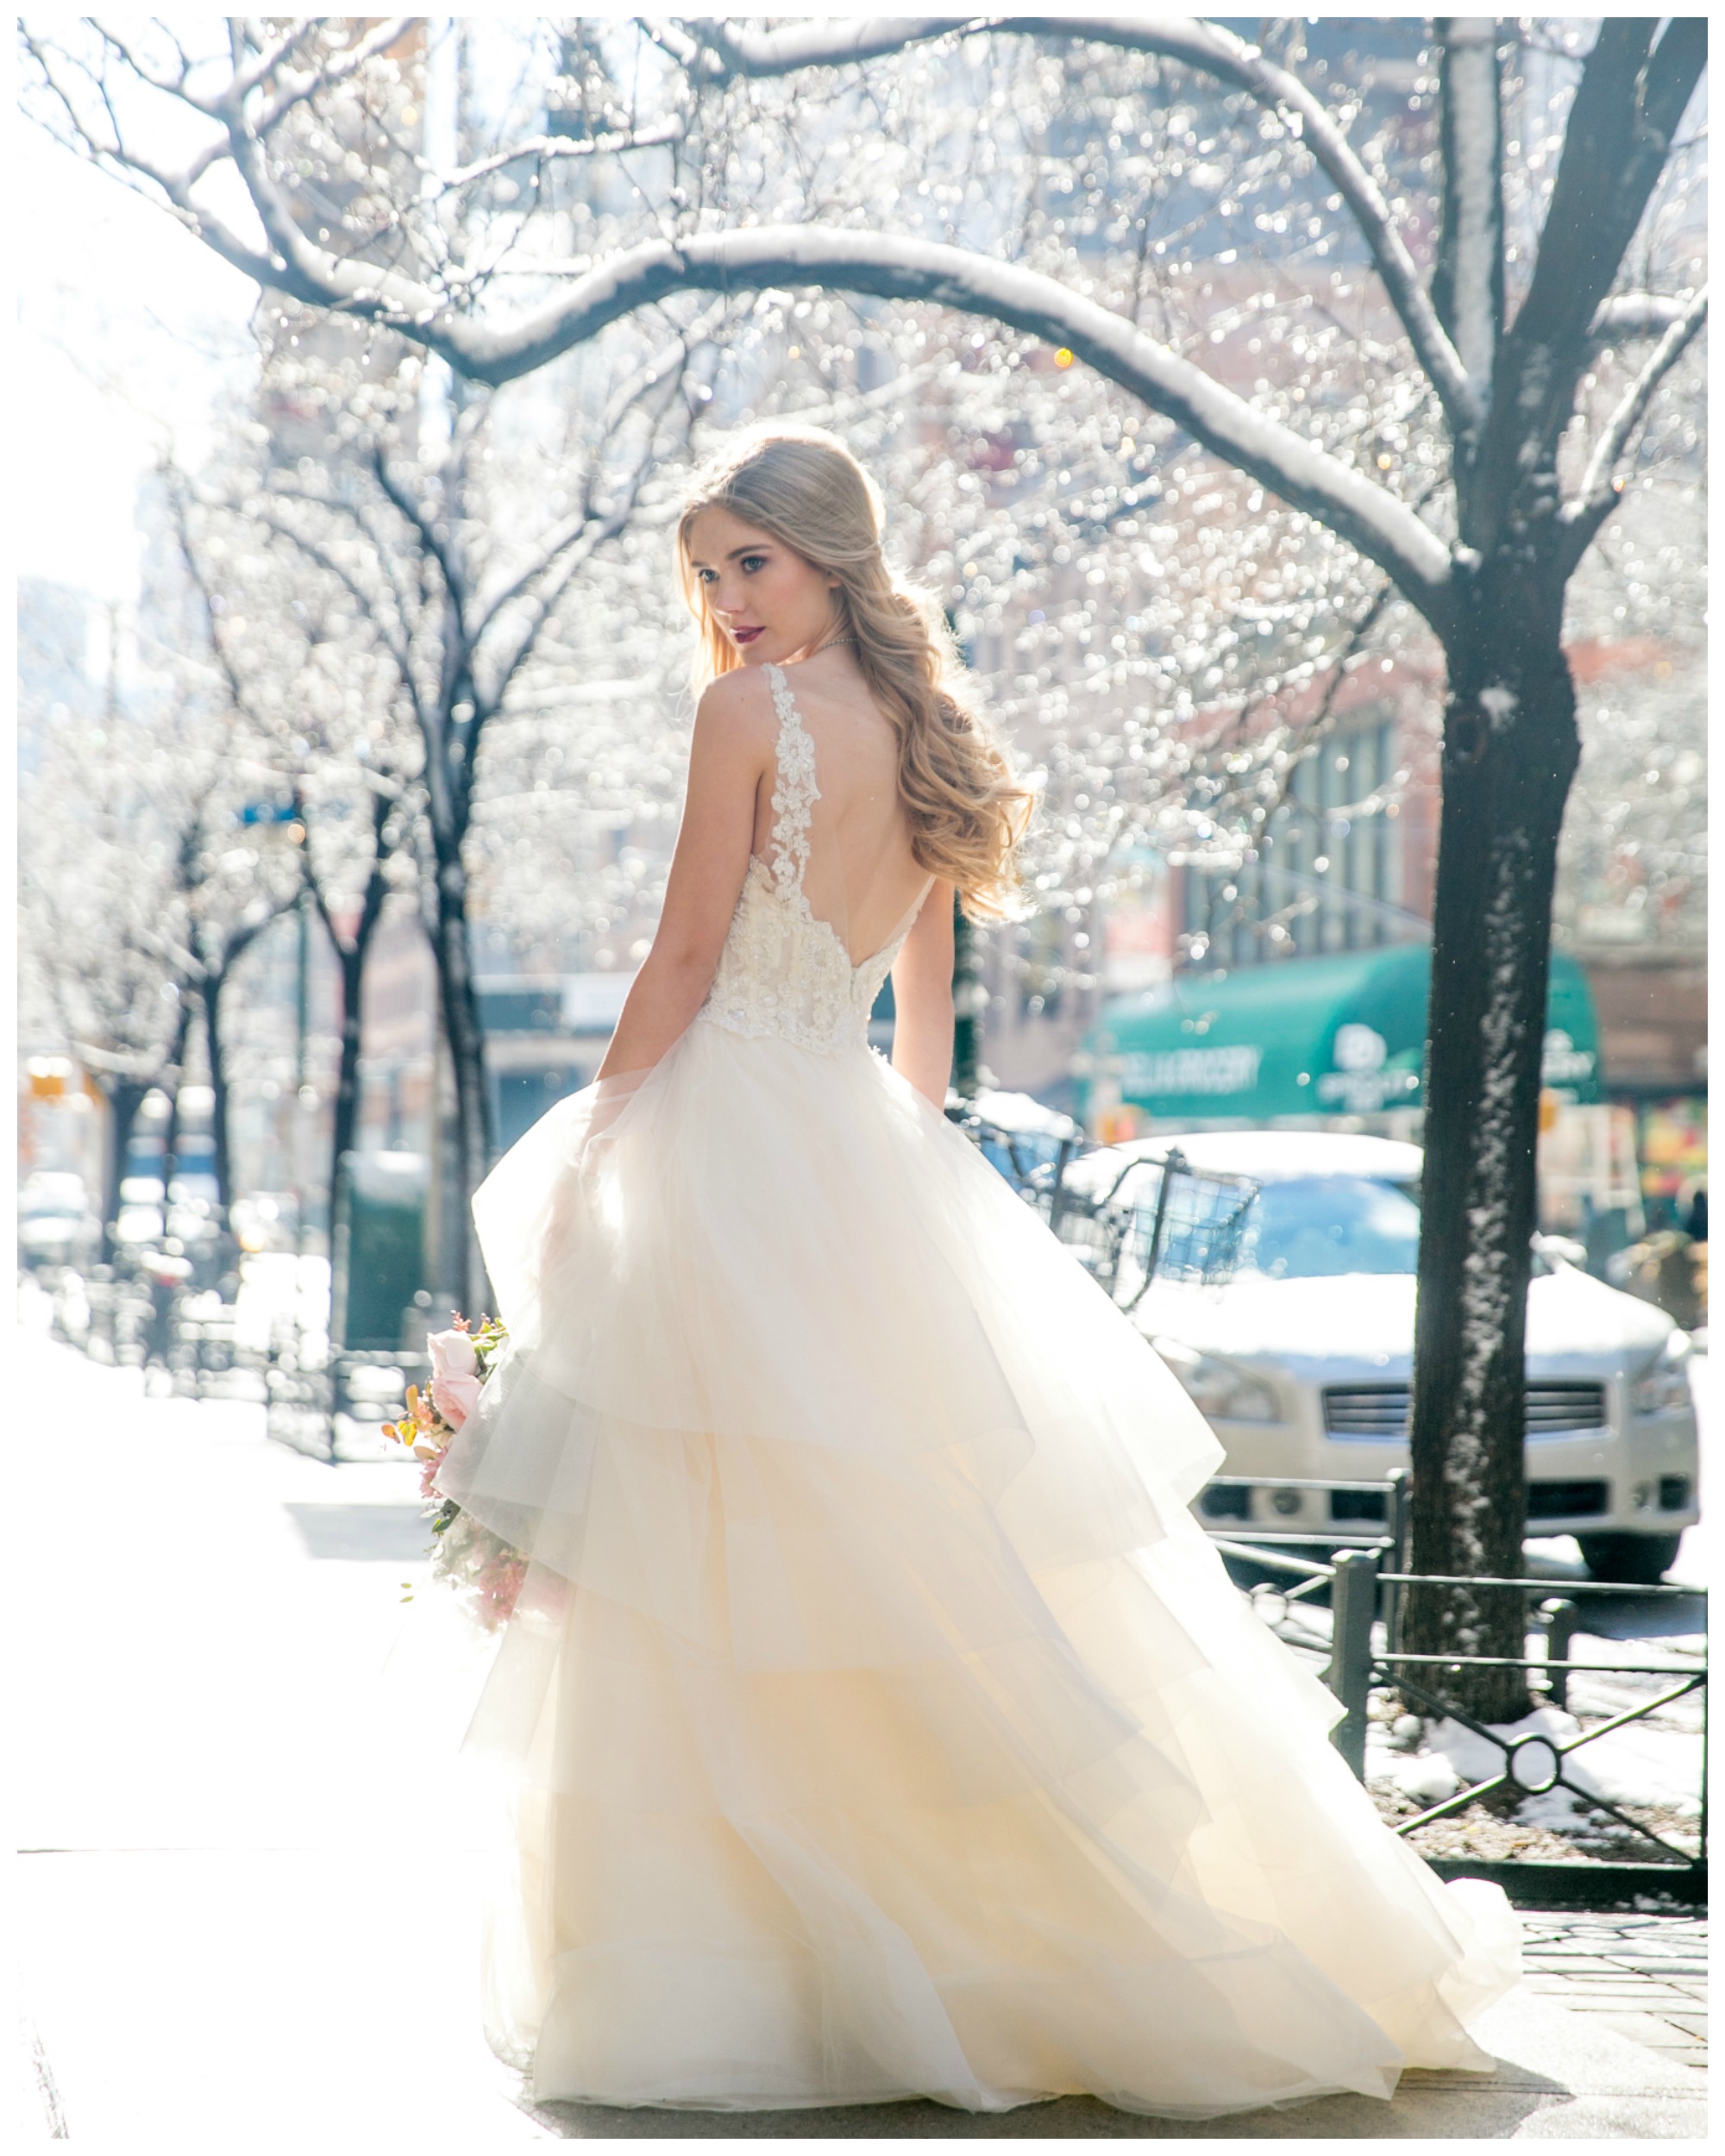 Bride on a snowy street in New York City